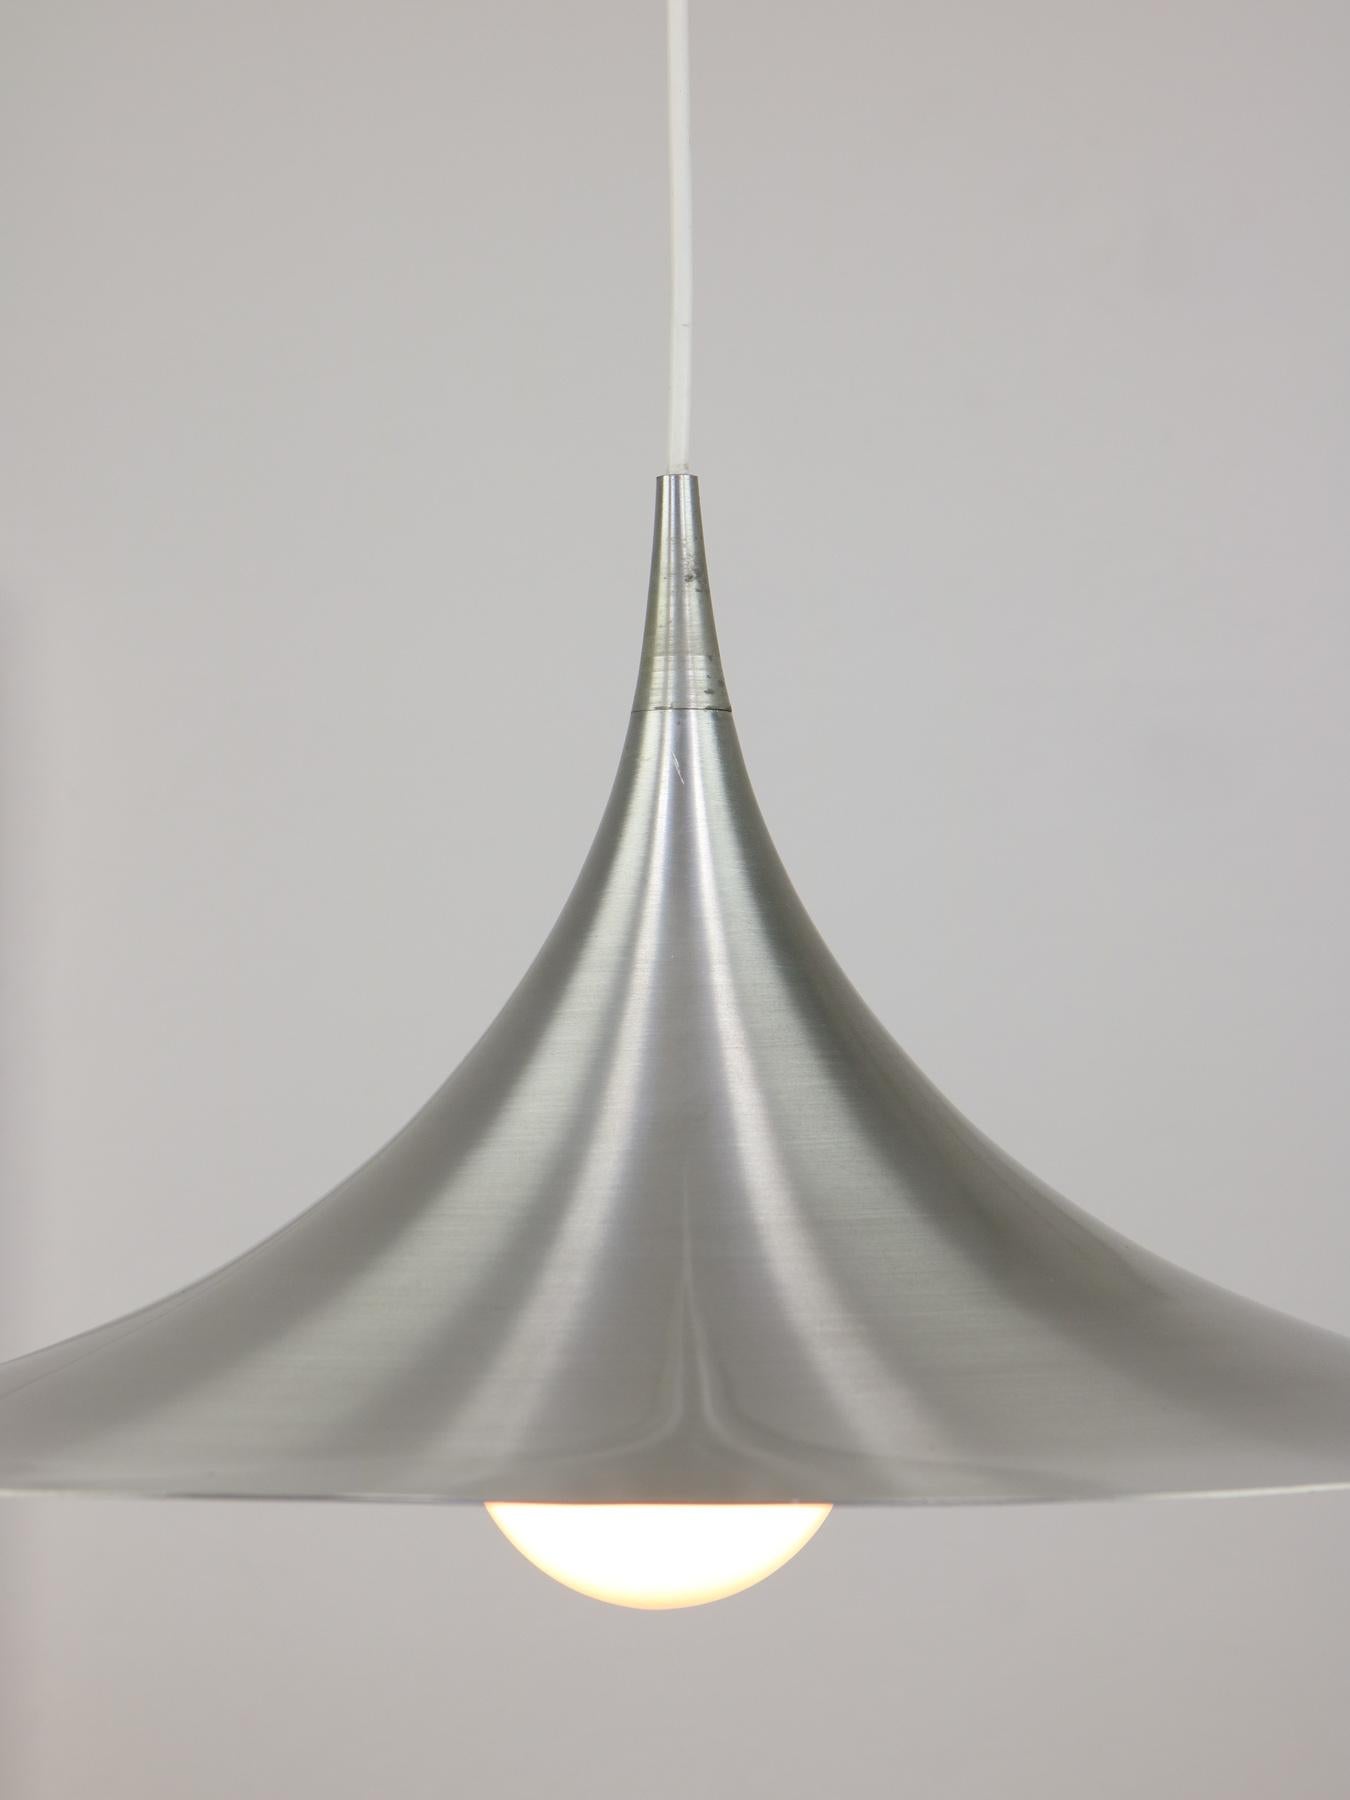 Metalwork Danish Aluminum Semi Pendant by Claus Bonderup & Torsten Thorup, 60s For Sale